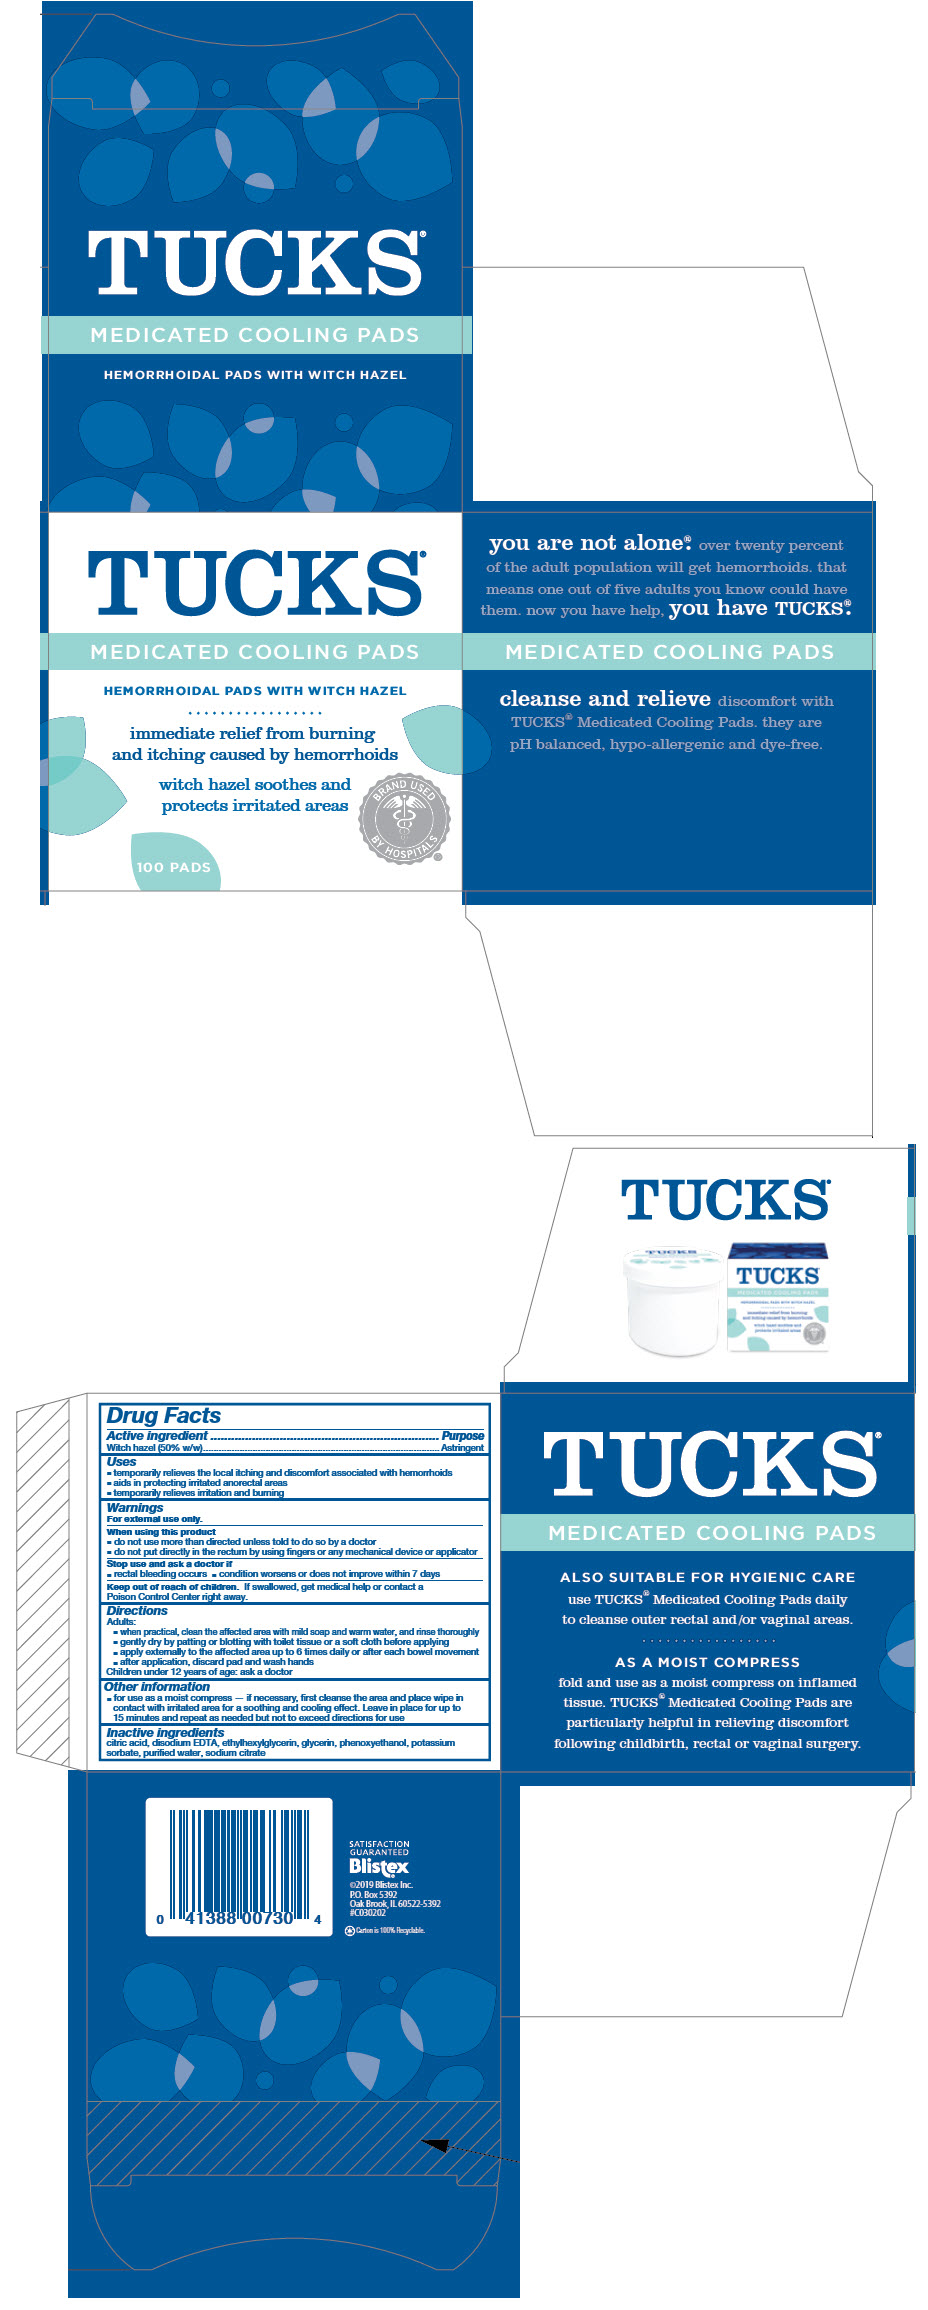 Tucks ® Medicated Cooling Pads